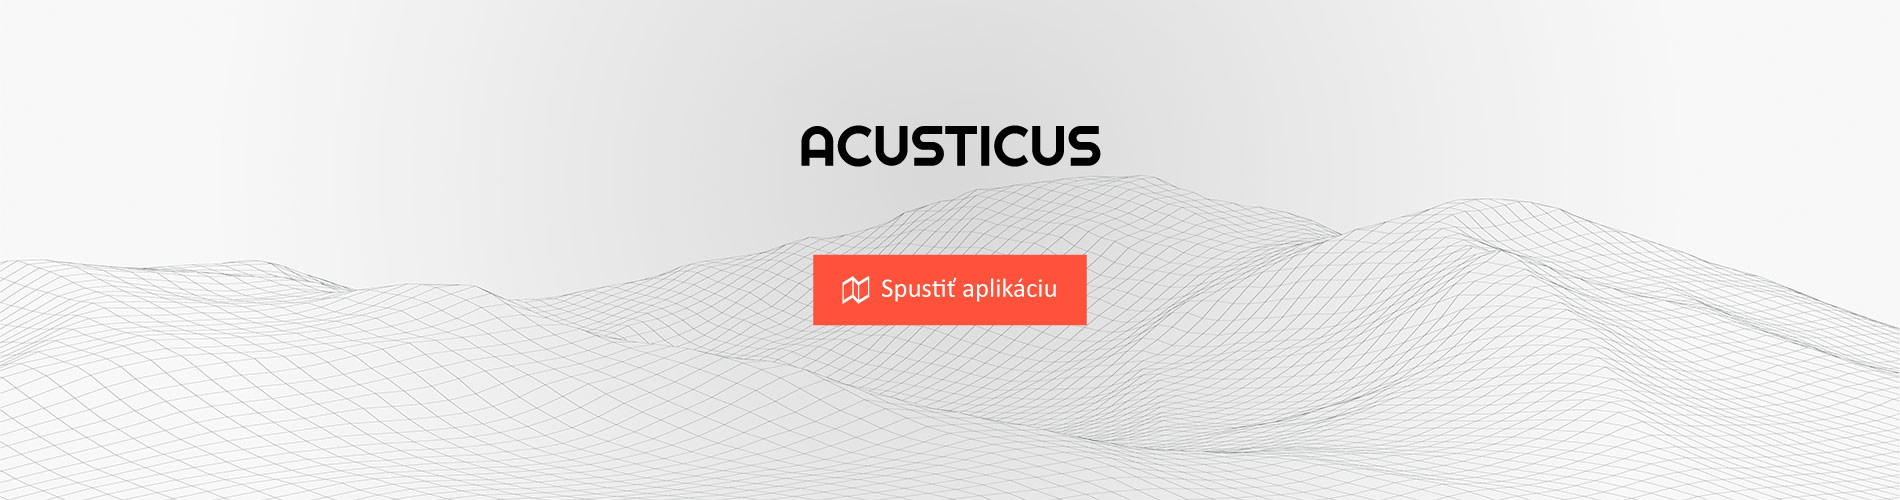 acusticus_button